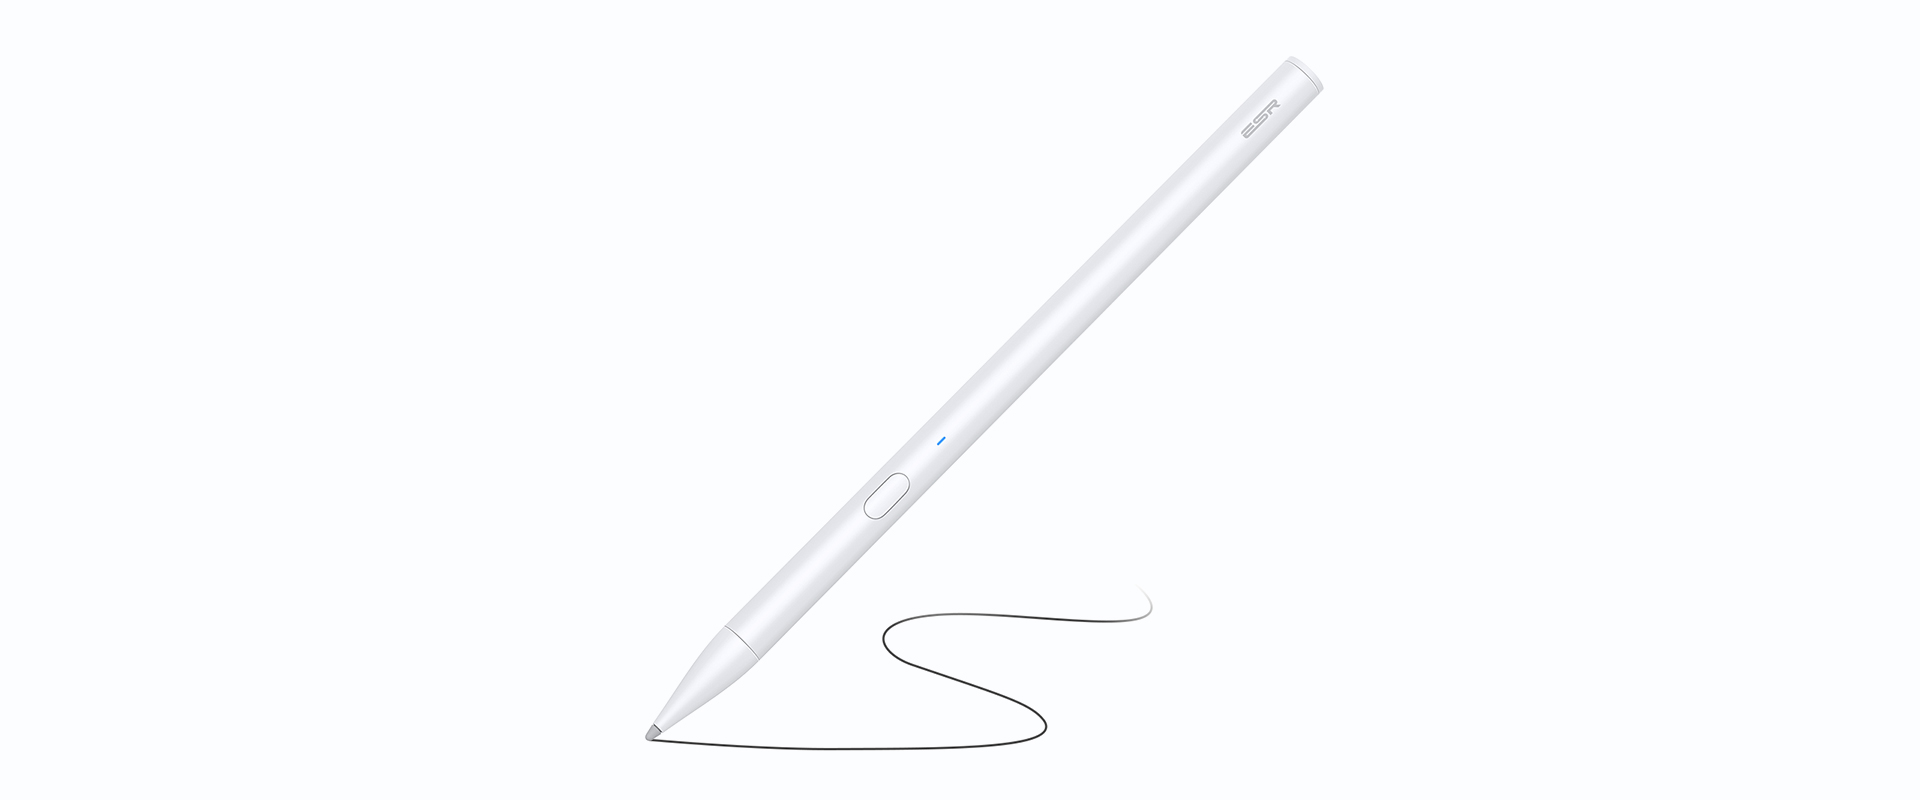 ESR Digital Pencil for iPad 1 1